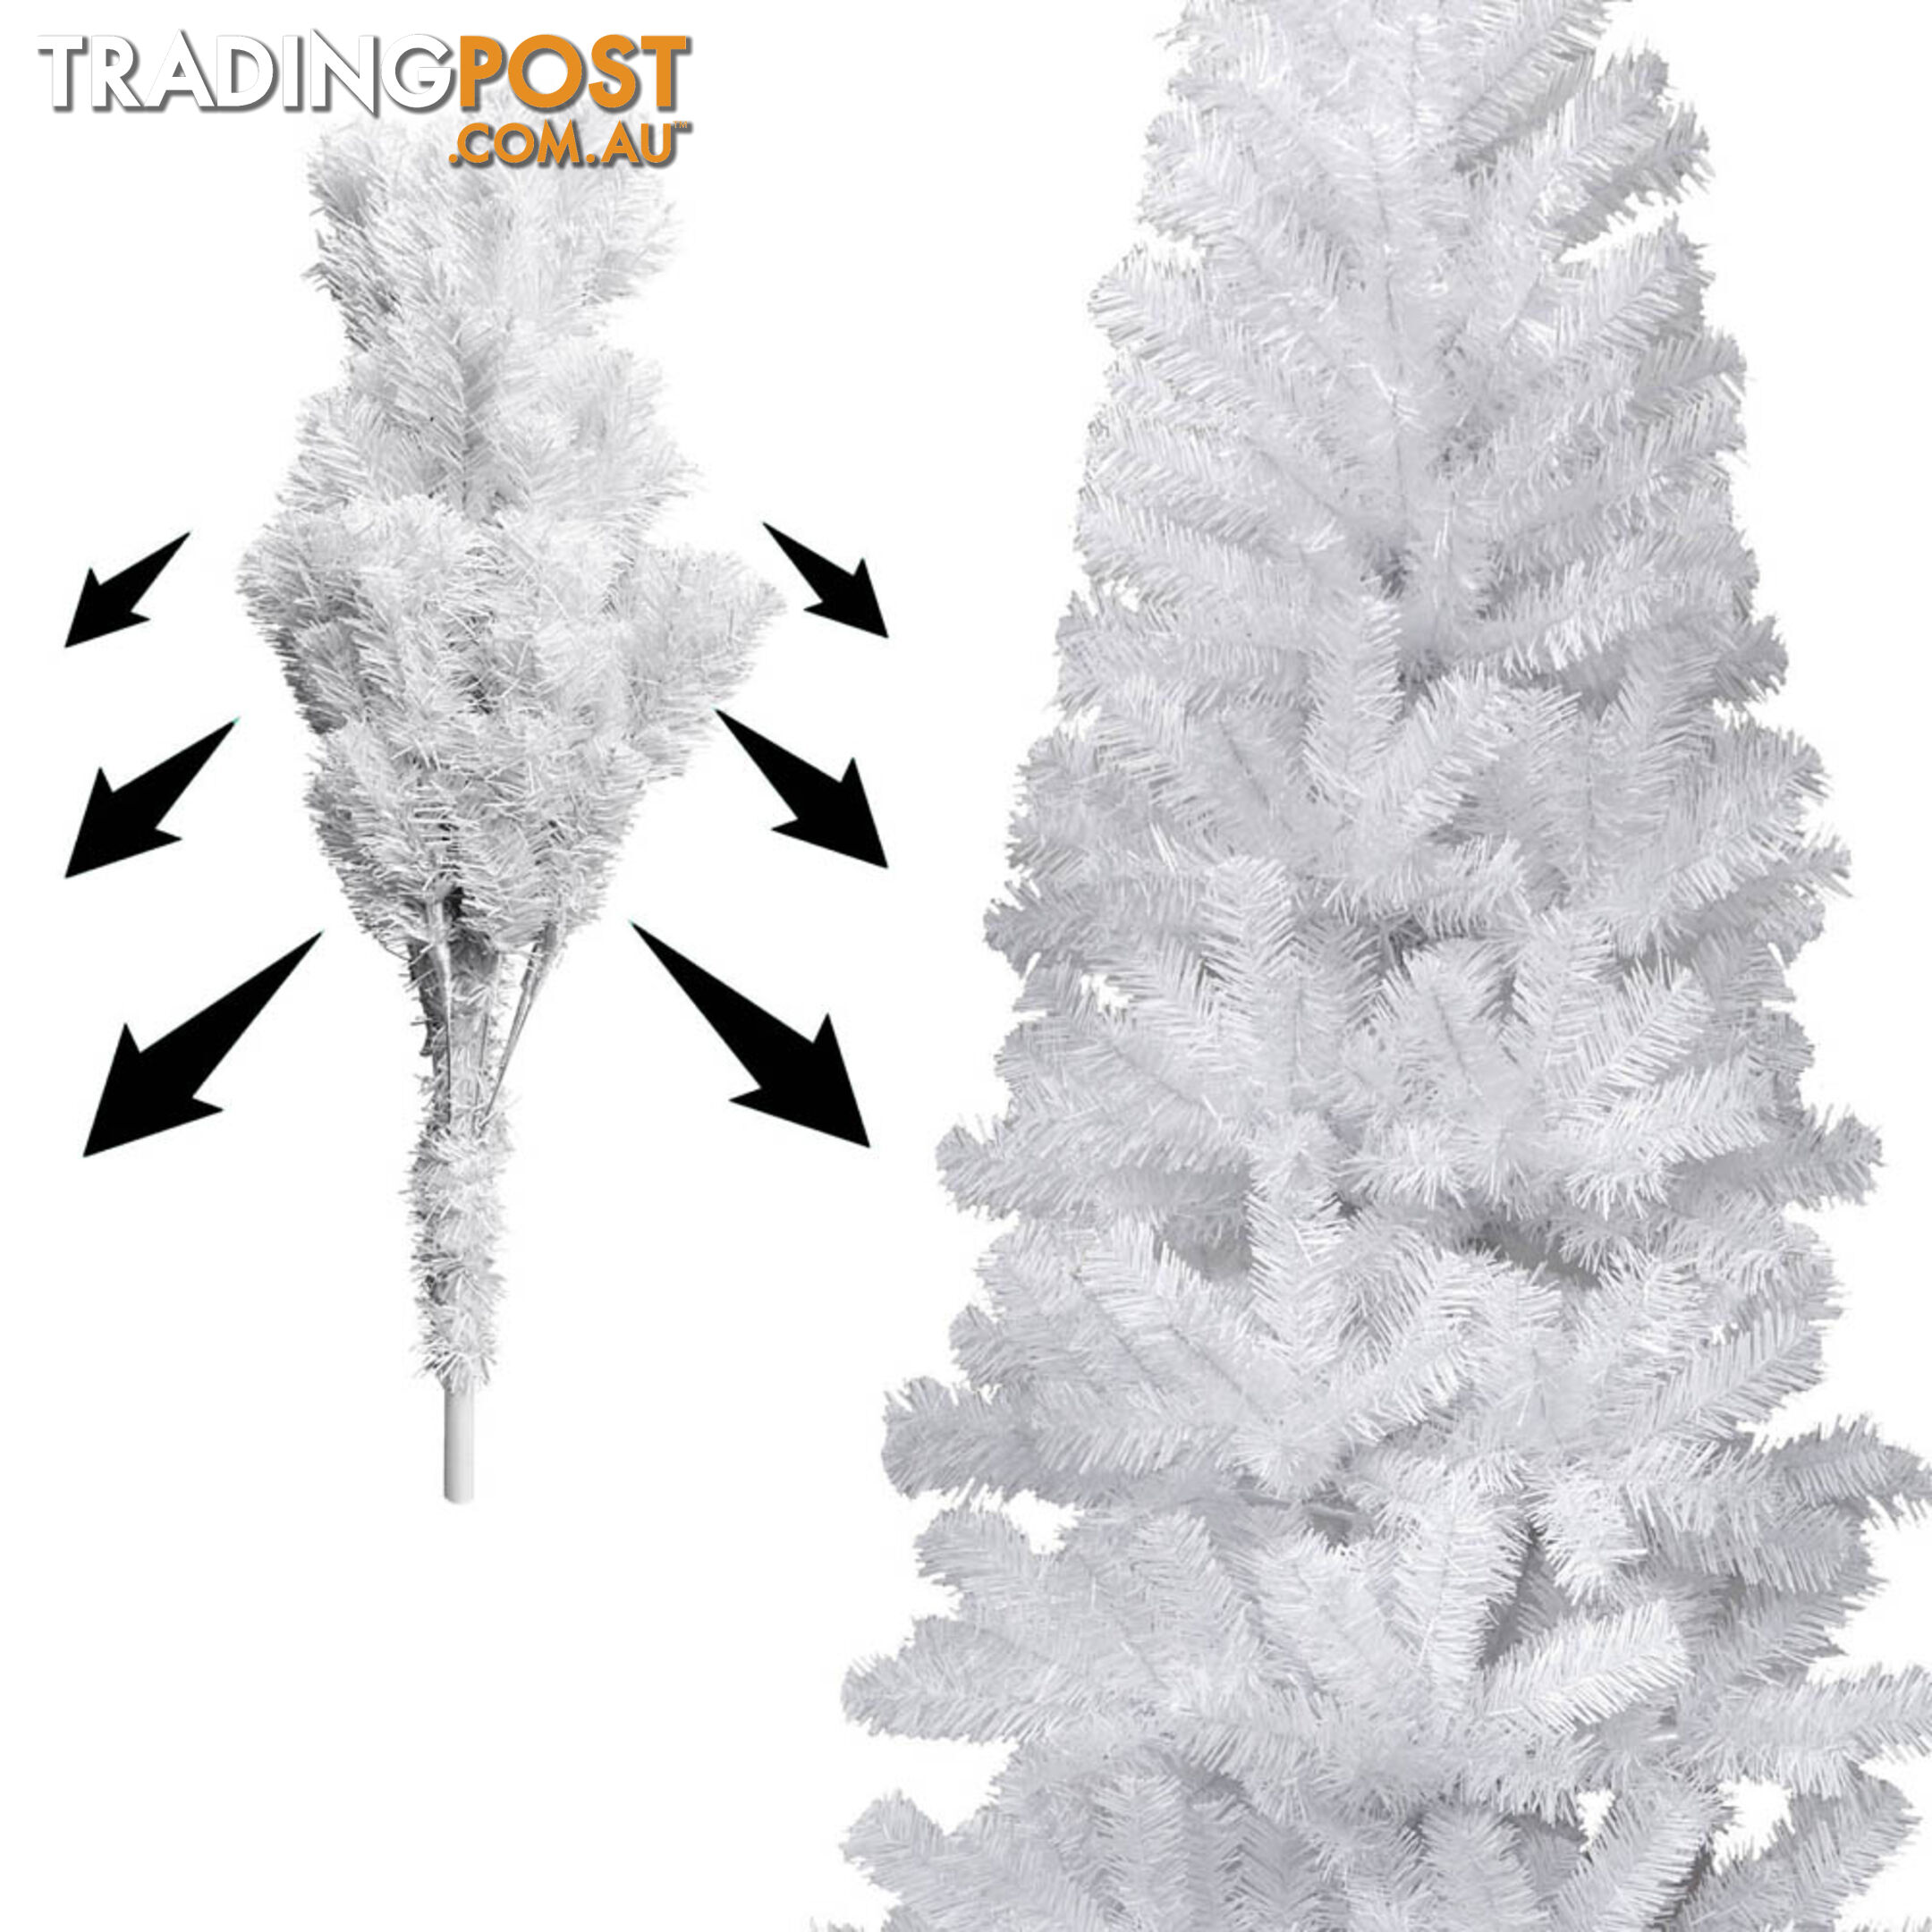 7FT Premium Christmas Tree Free Ornament 210CM Xmas Decorate Steel Base White